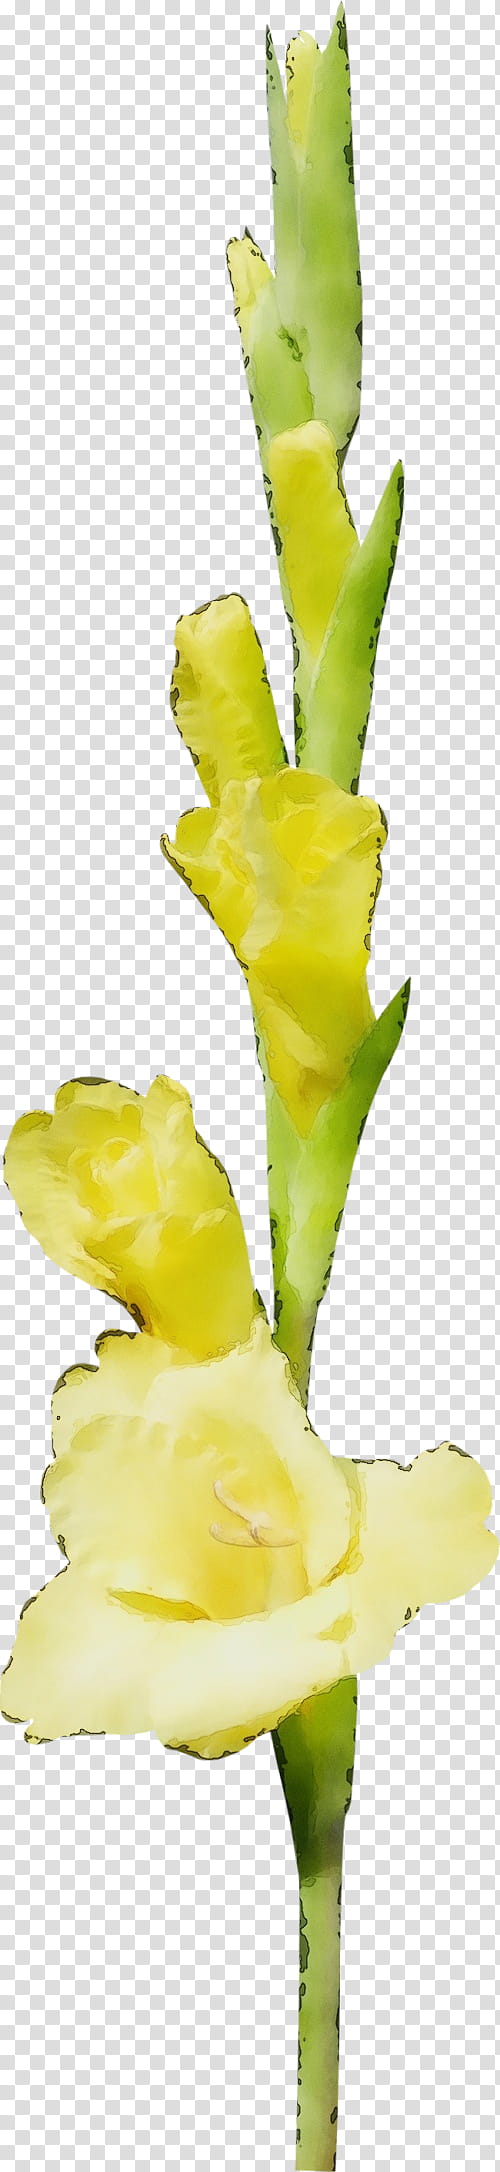 flower flowering plant yellow plant gladiolus, Watercolor, Paint, Wet Ink, Petal, Iris Family, Plant Stem, Cut Flowers transparent background PNG clipart